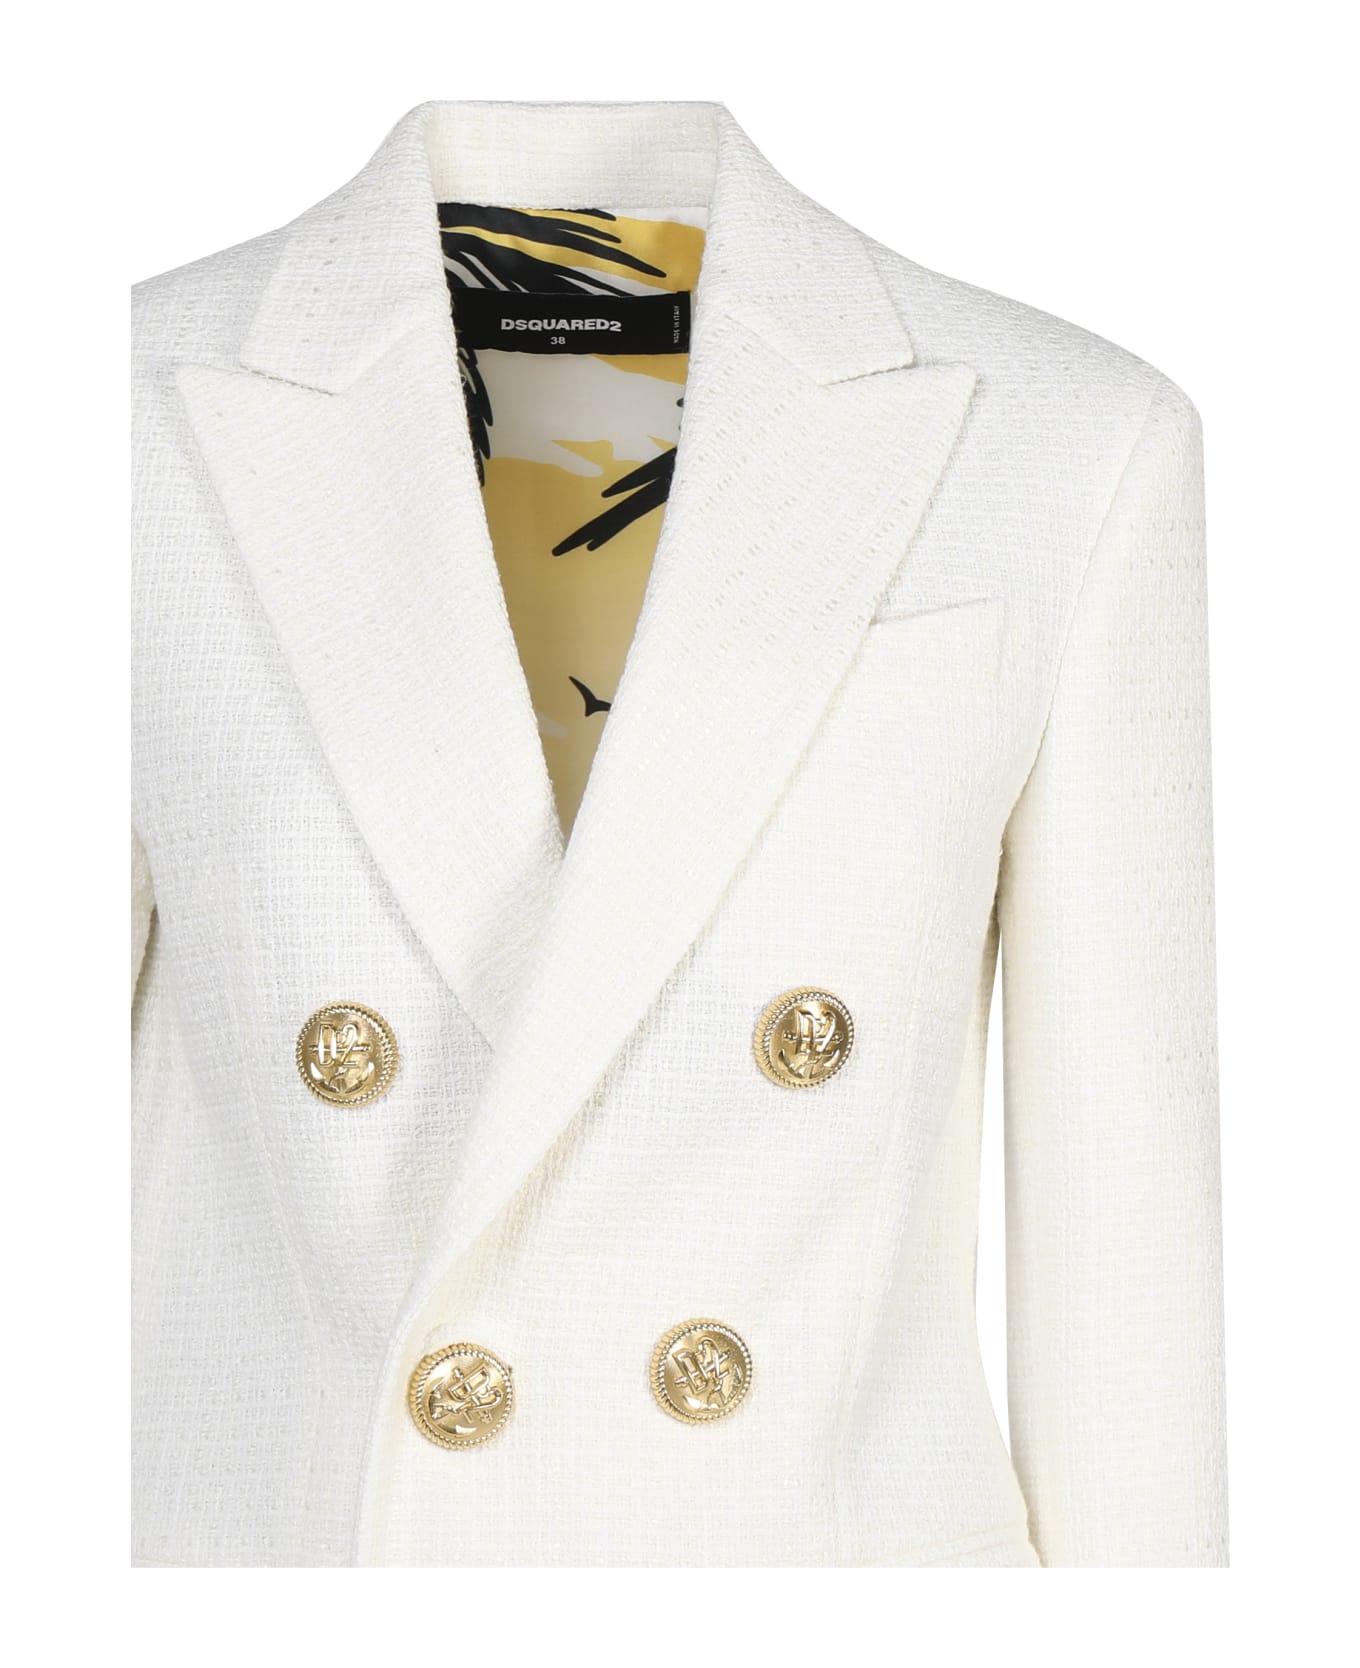 Dsquared2 Tweed Suit - White